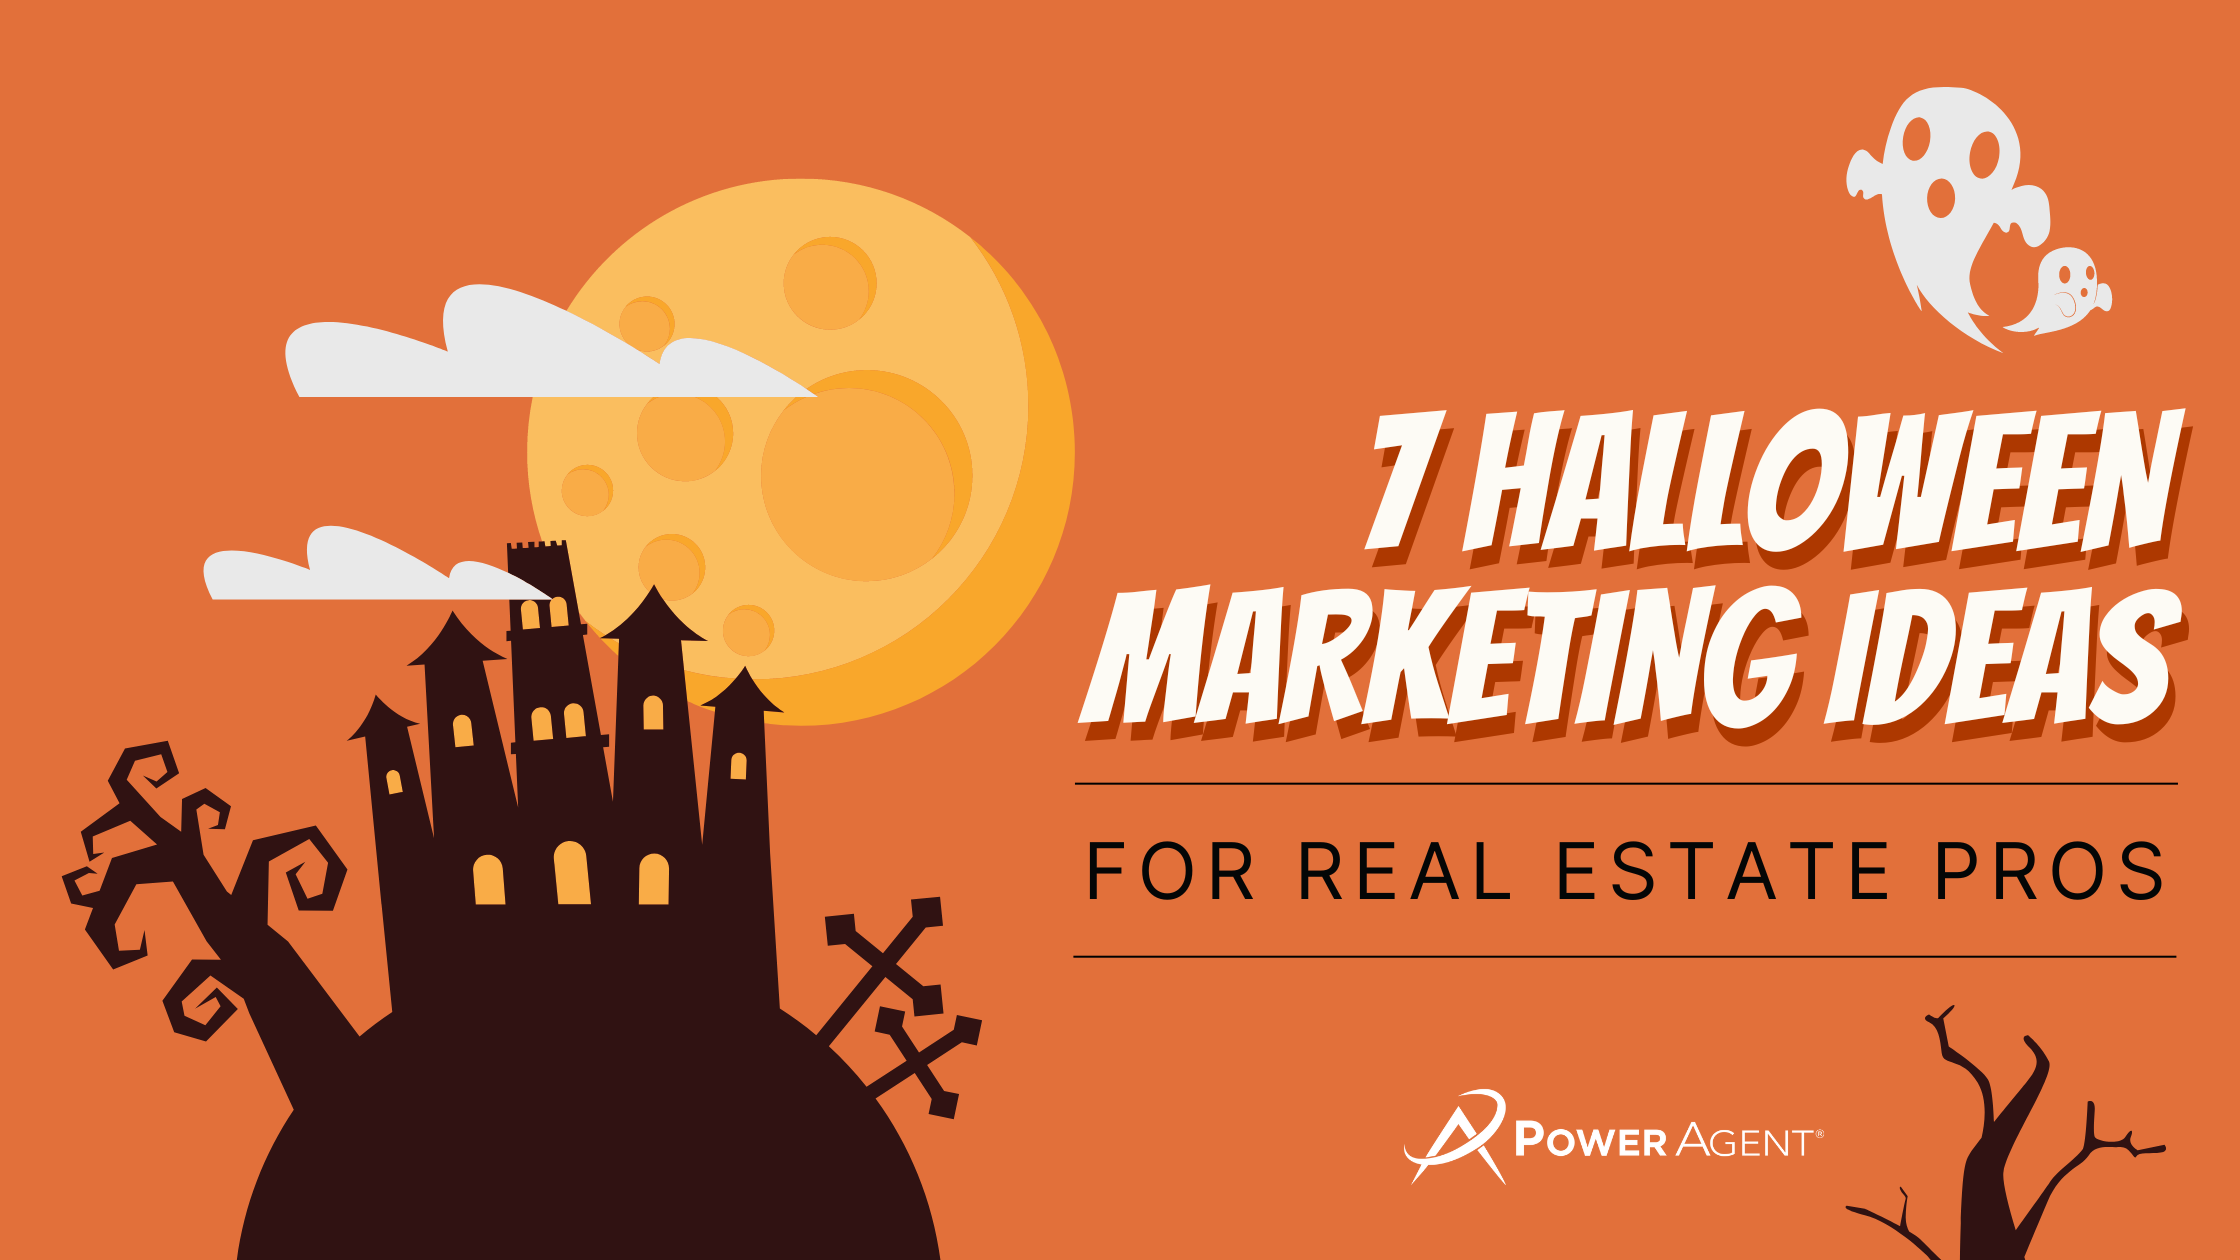 Halloween-Marketing-Ideas-for-Real-Estate-Pros-